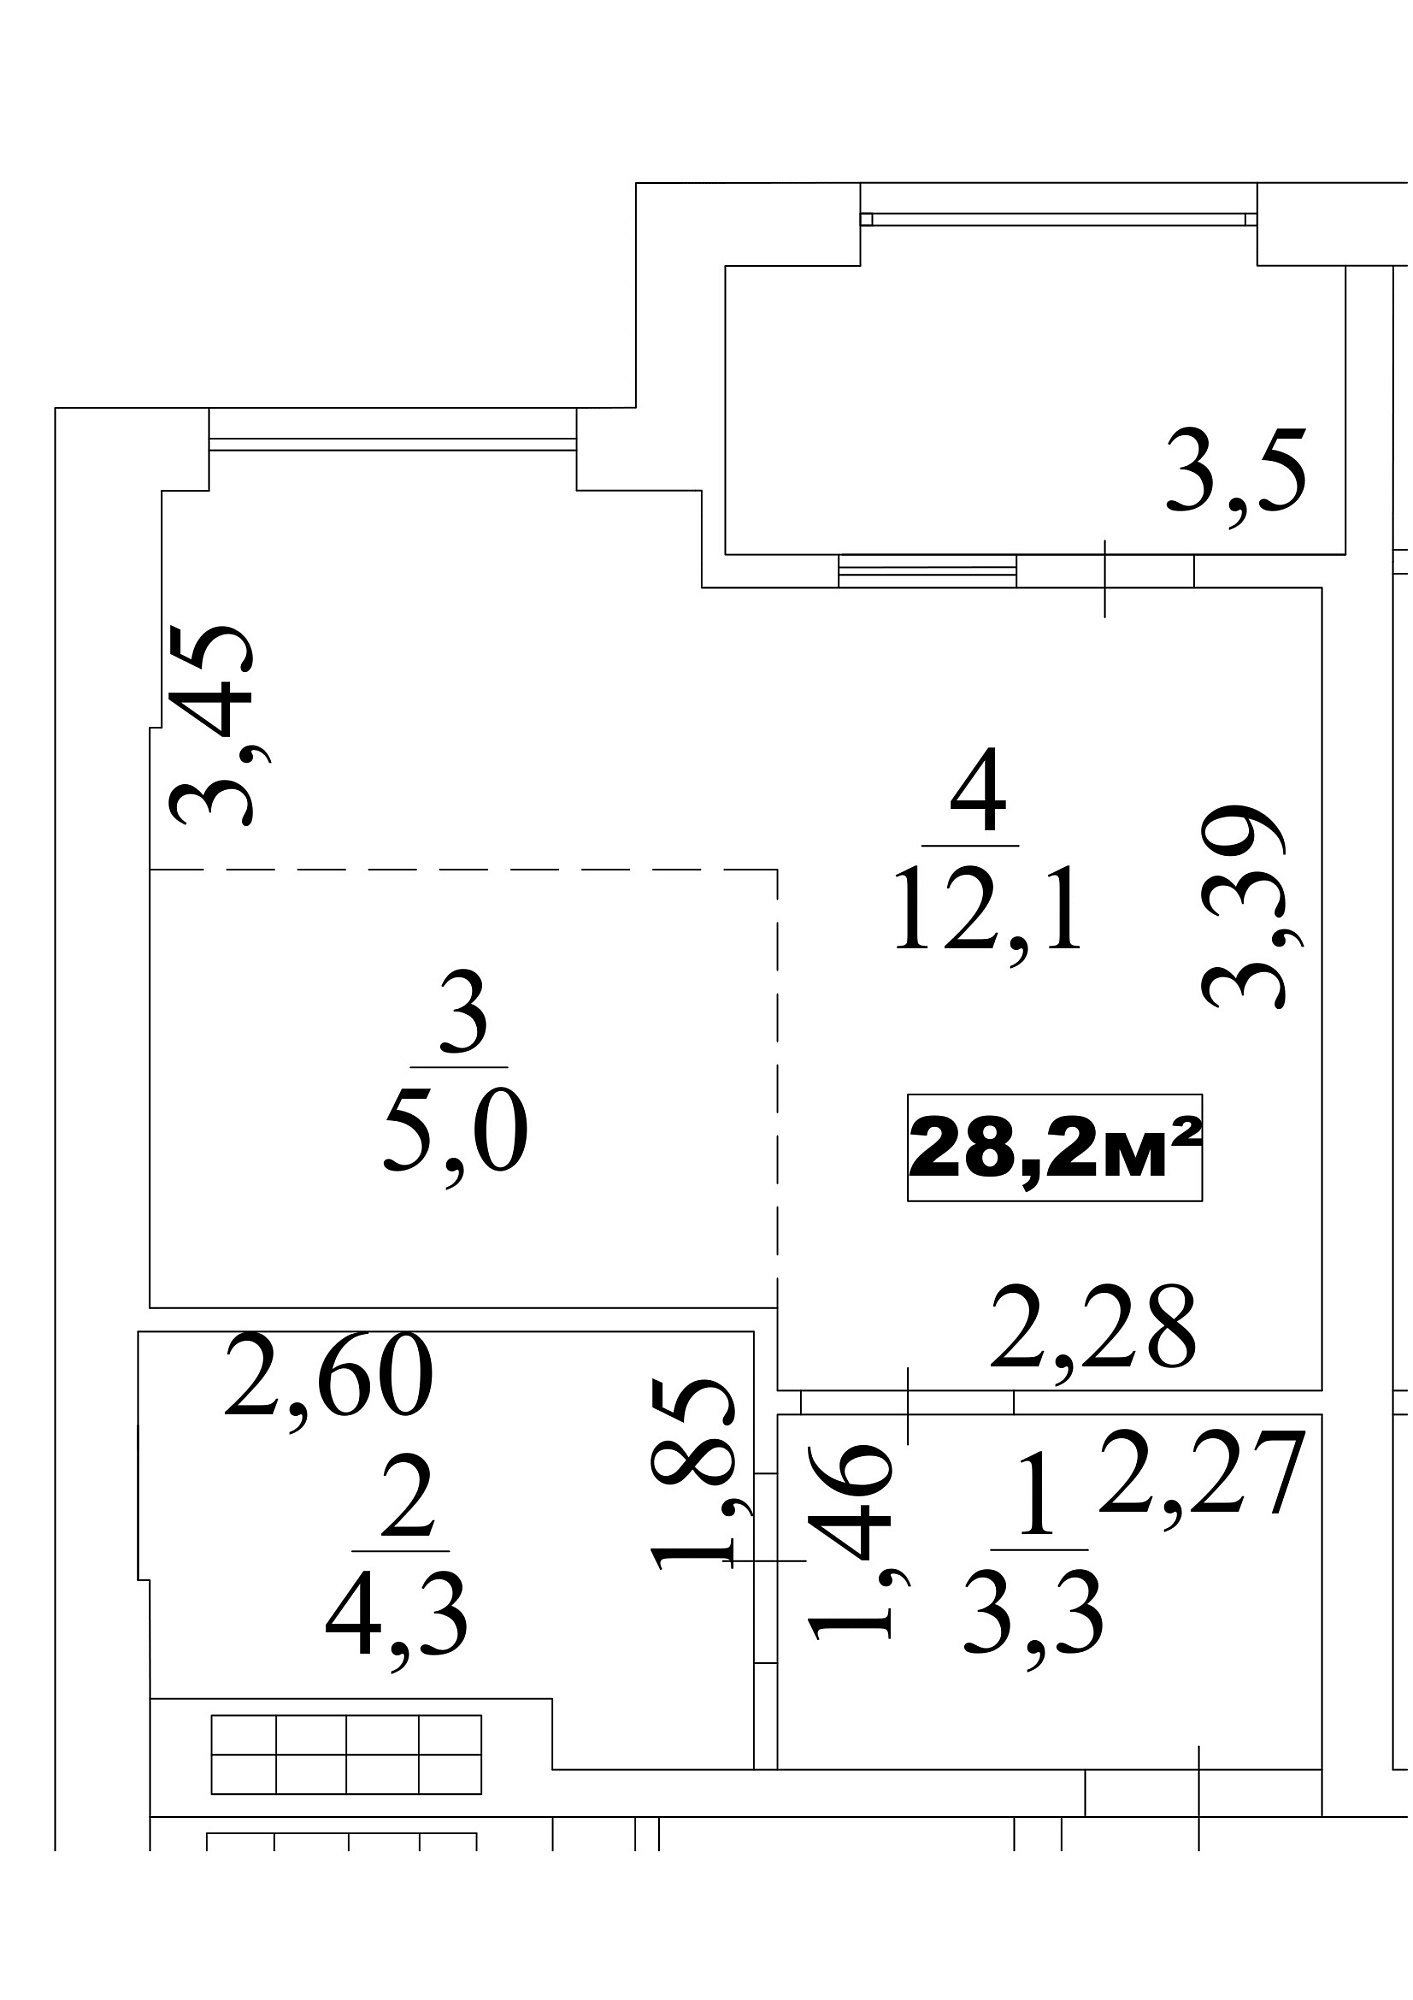 Планировка Smart-квартира площей 28.2м2, AB-10-09/0075б.